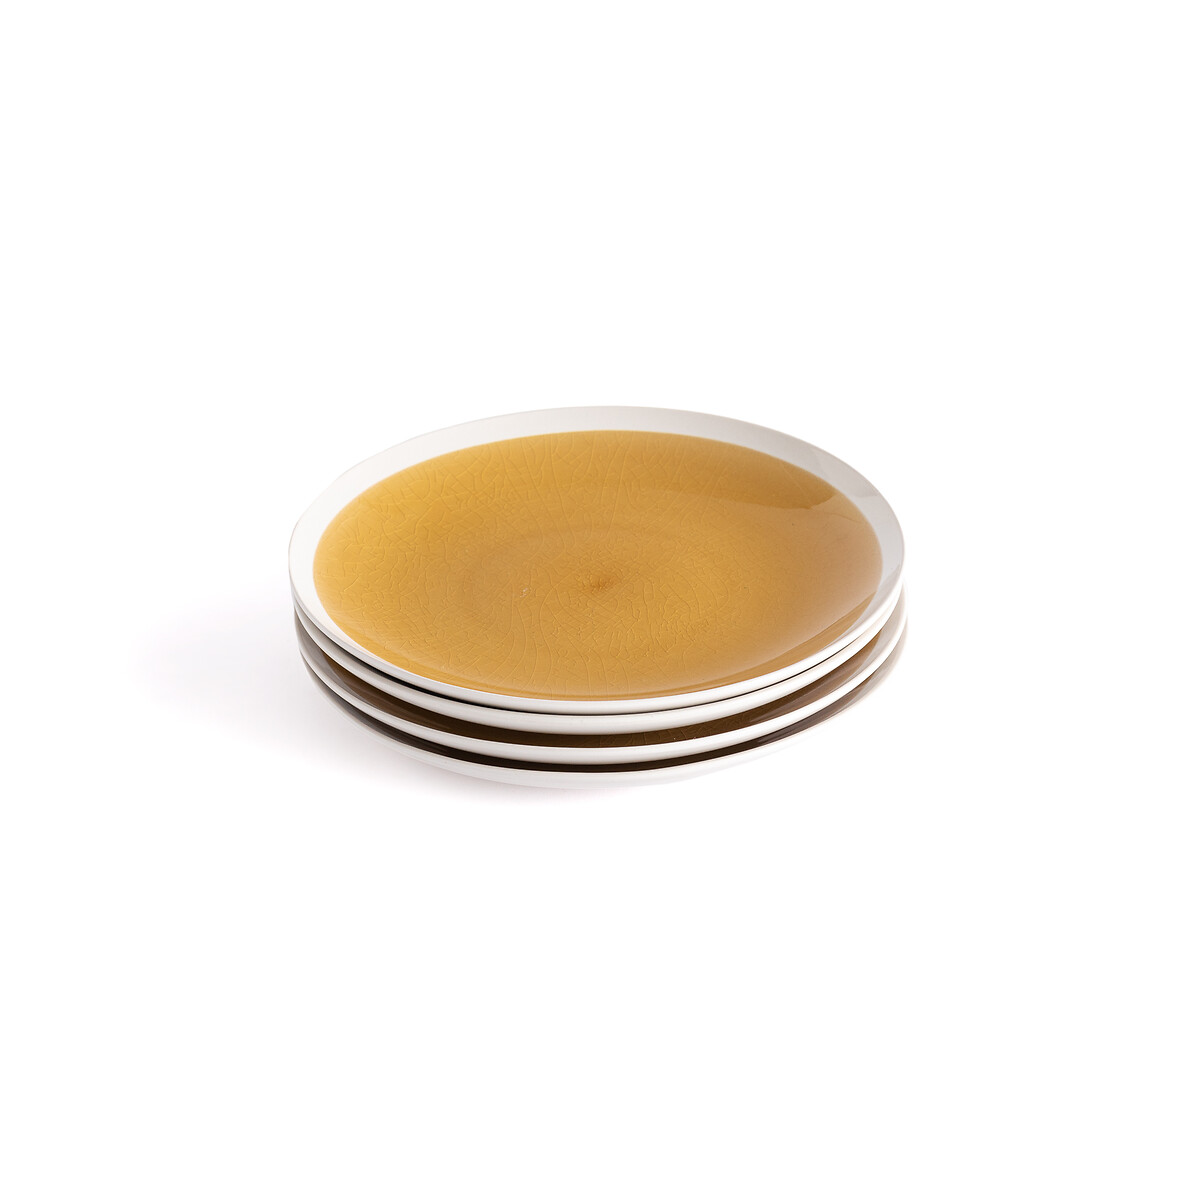 Комплект из четырех тарелок десертных из керамики Liseria единый размер желтый комплект из четырех тарелок десертных из керамики liseria единый размер желтый